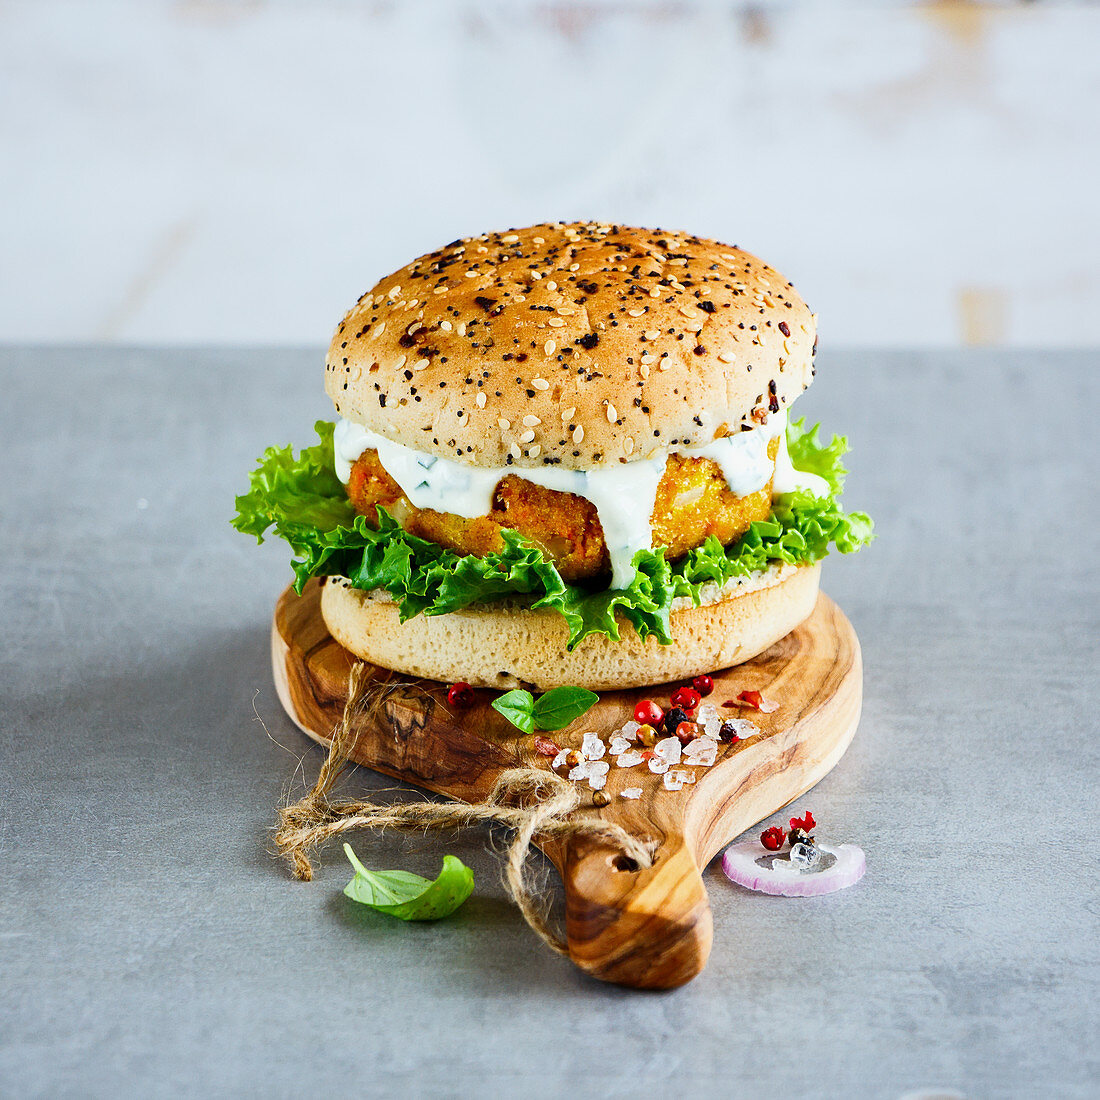 Healthy homemade vegan carrot and oats burger, wholegrain buns